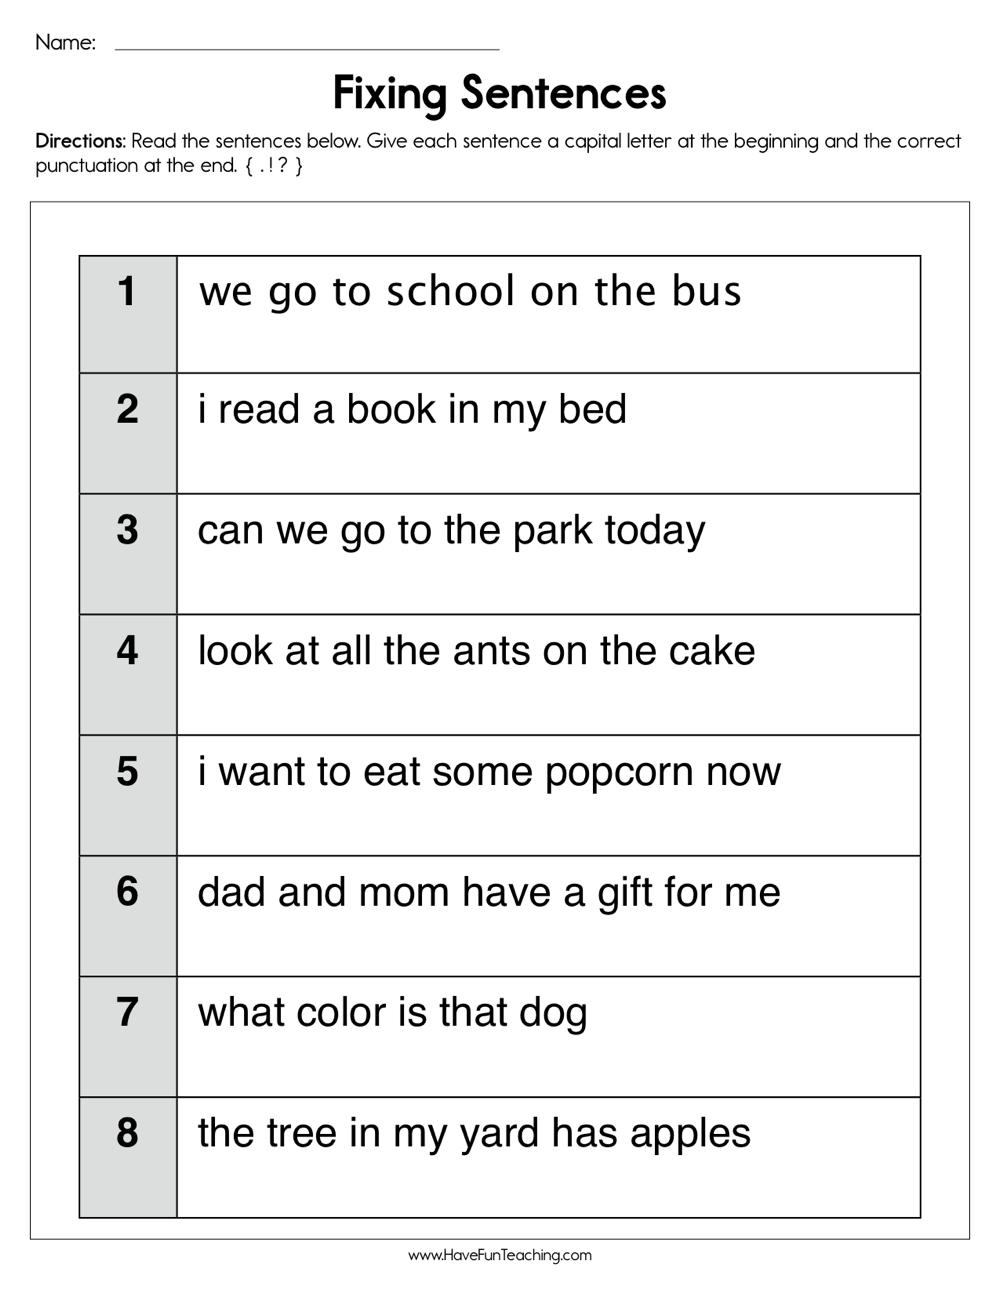 Fixing Sentences Worksheet By Teach Simple